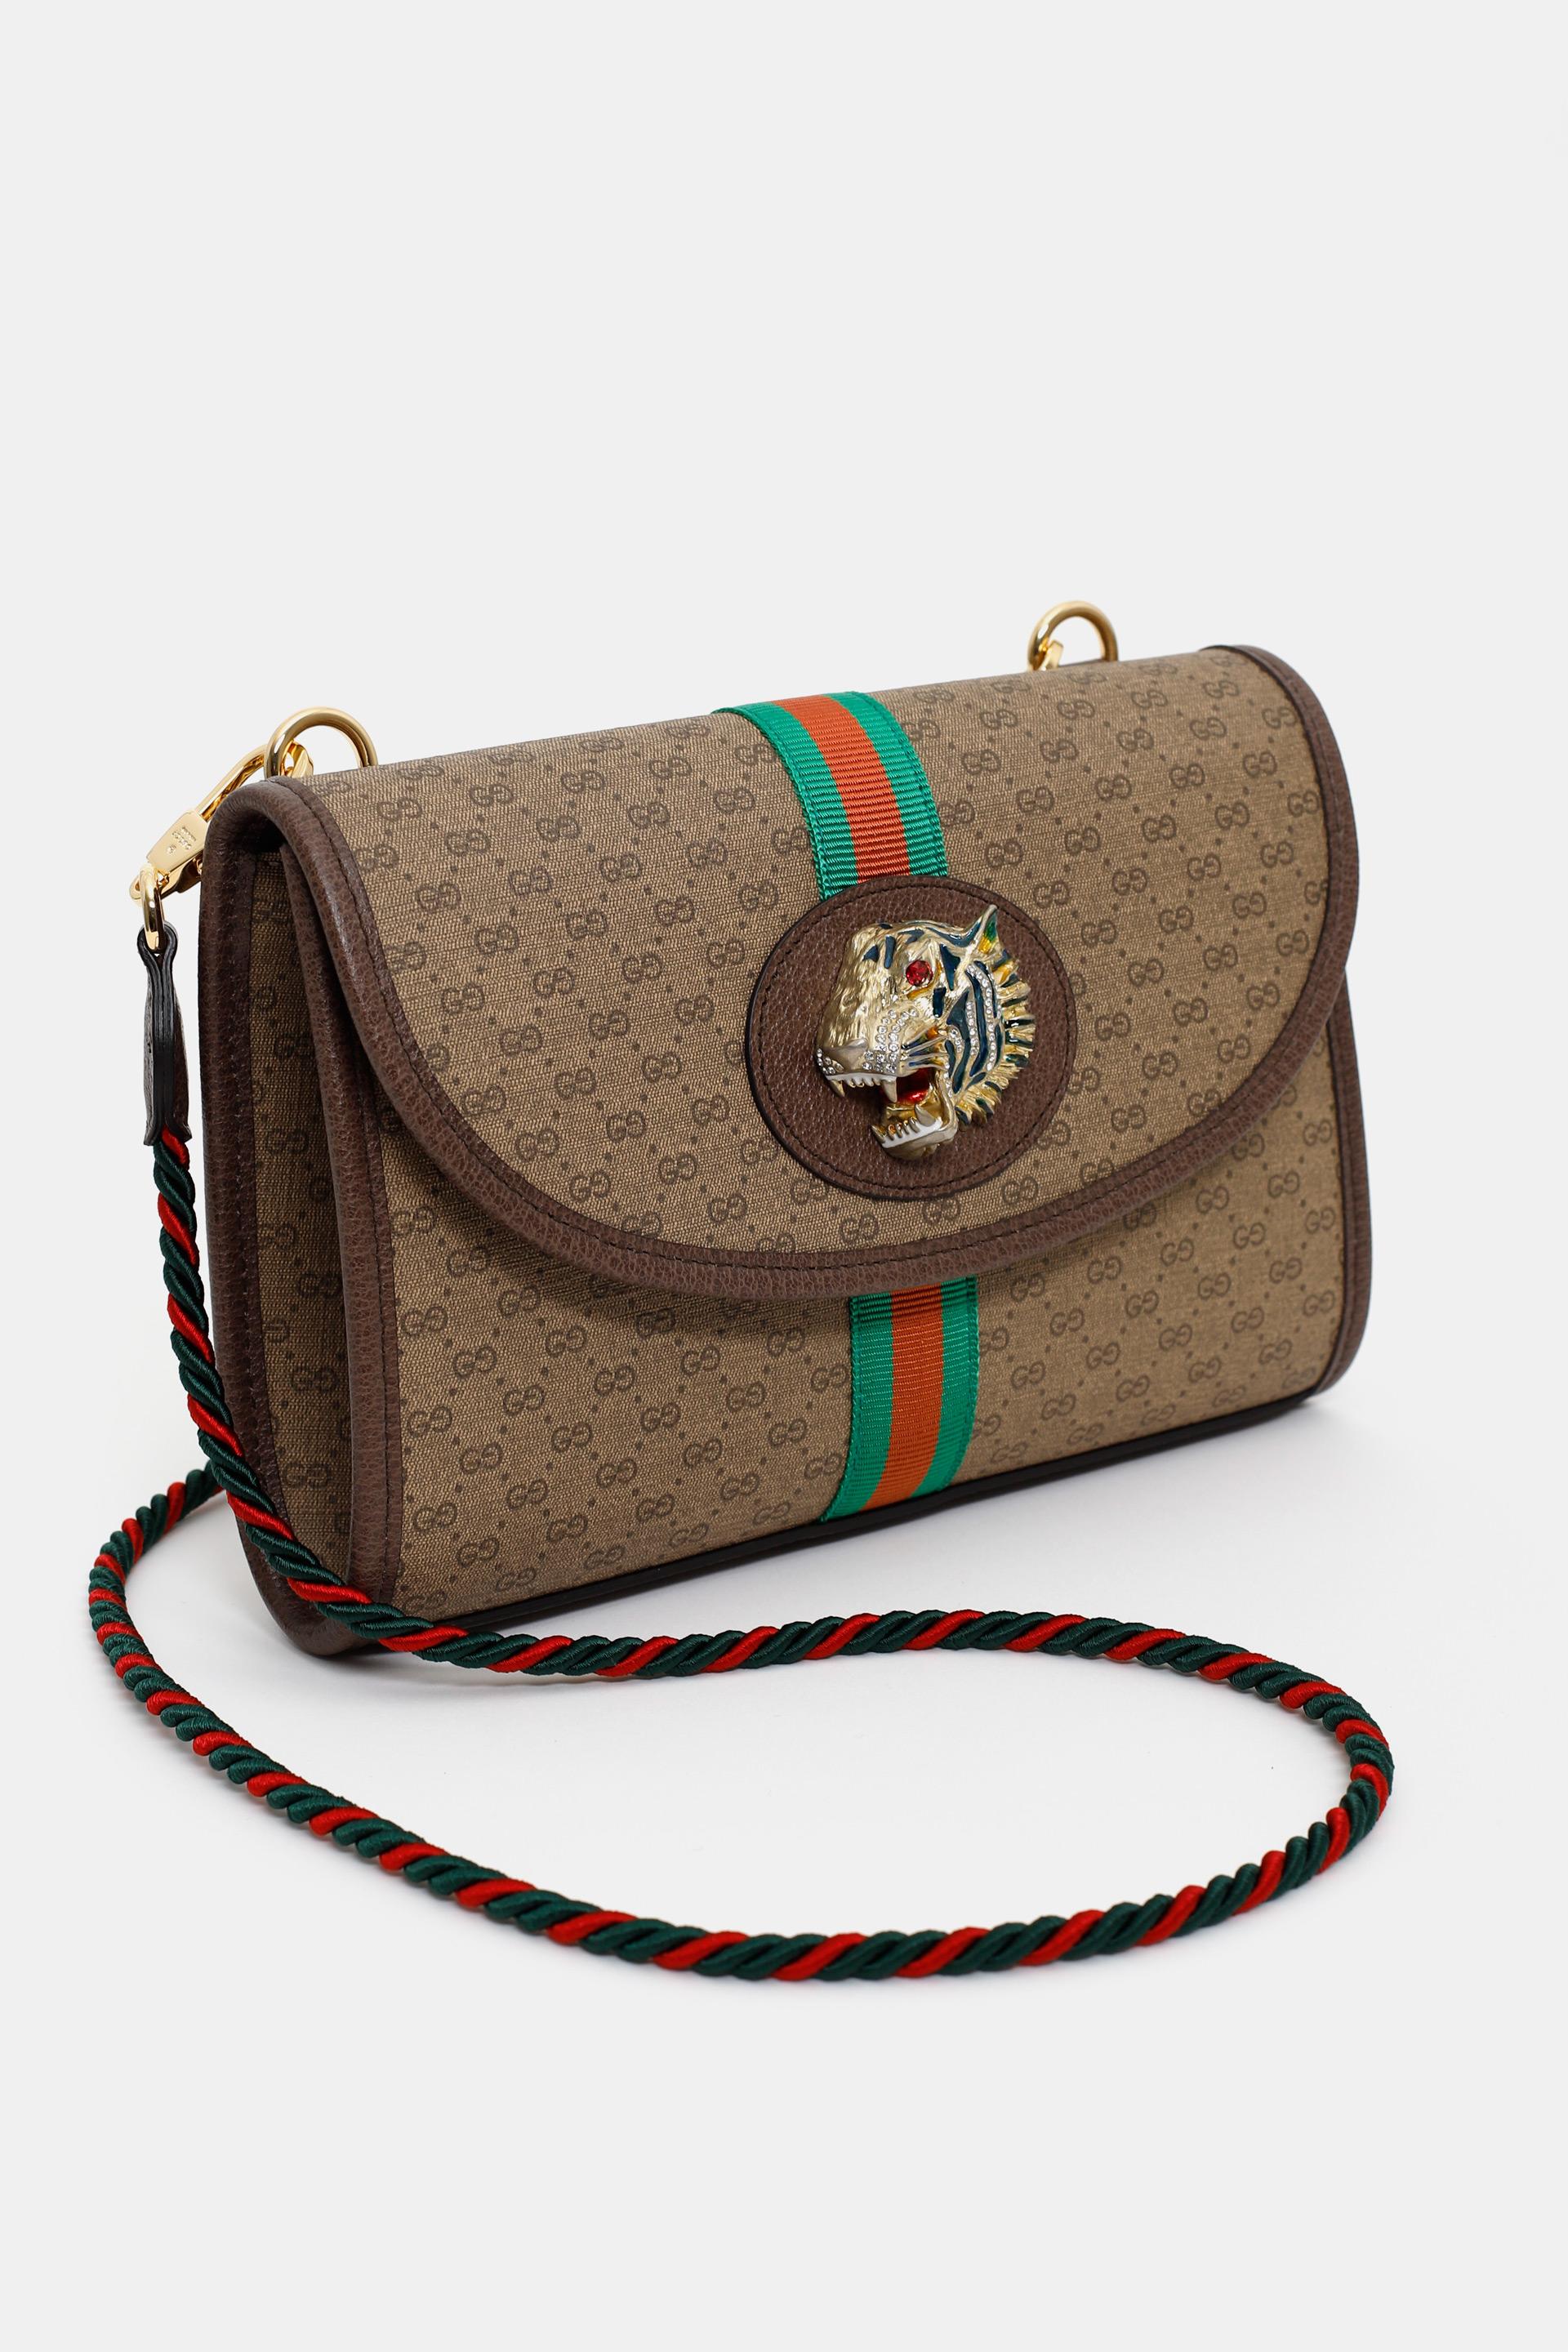 Lyst - Gucci Rajah Small Shoulder Bag - Save 36%